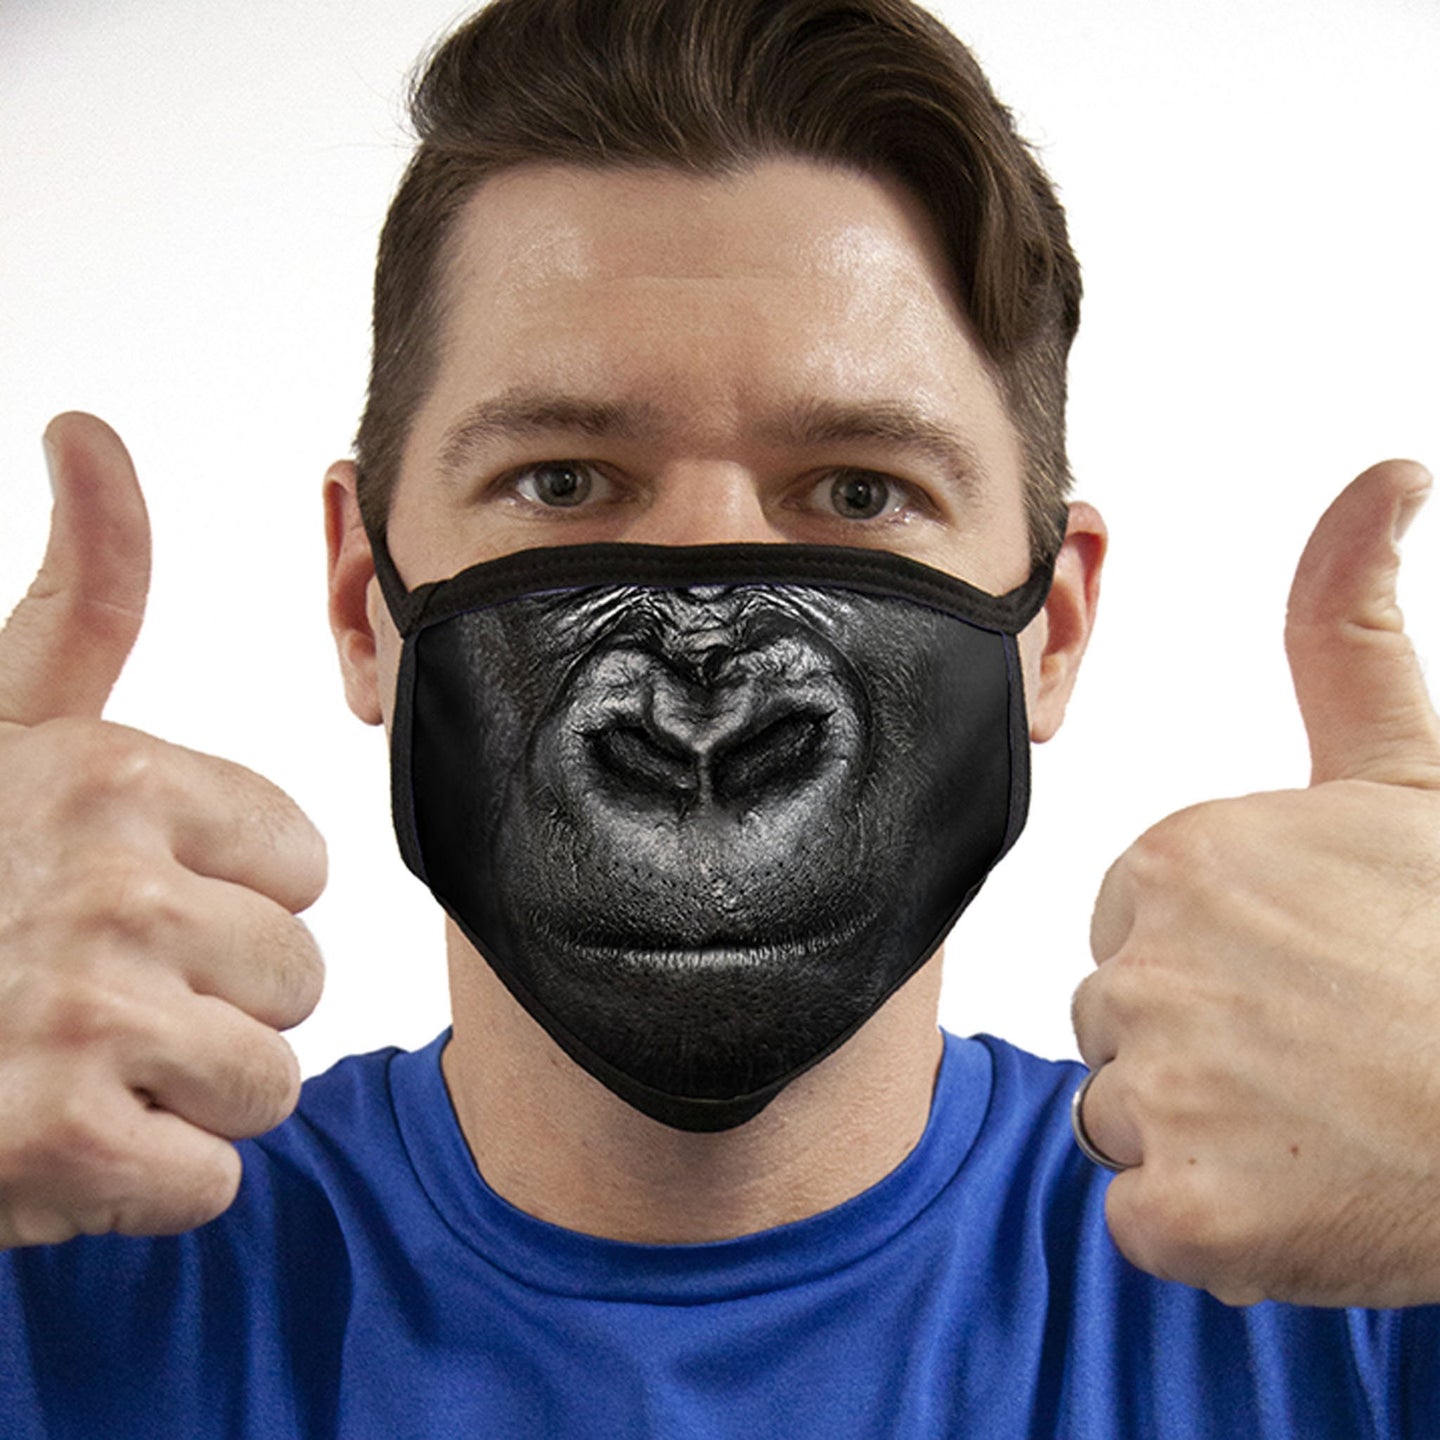 Gorilla FACE MASK Cover Your Face Masks